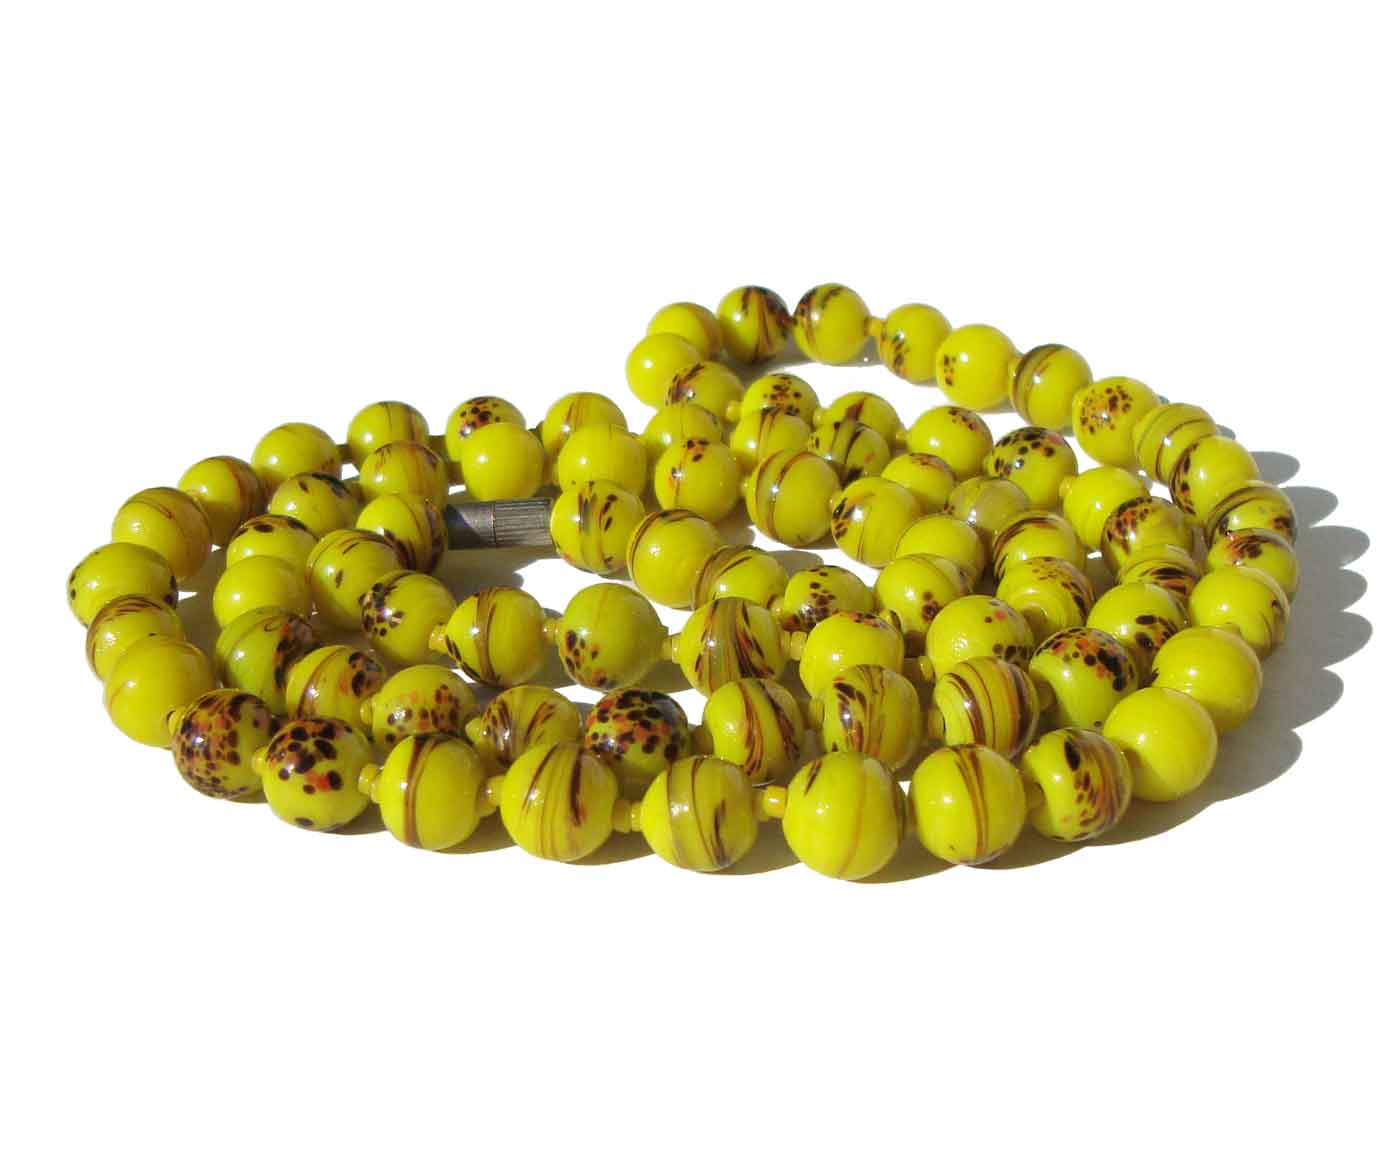 Vintage 60s Japanese Millifiori Beads Yellow Tonbo Beaded Necklace